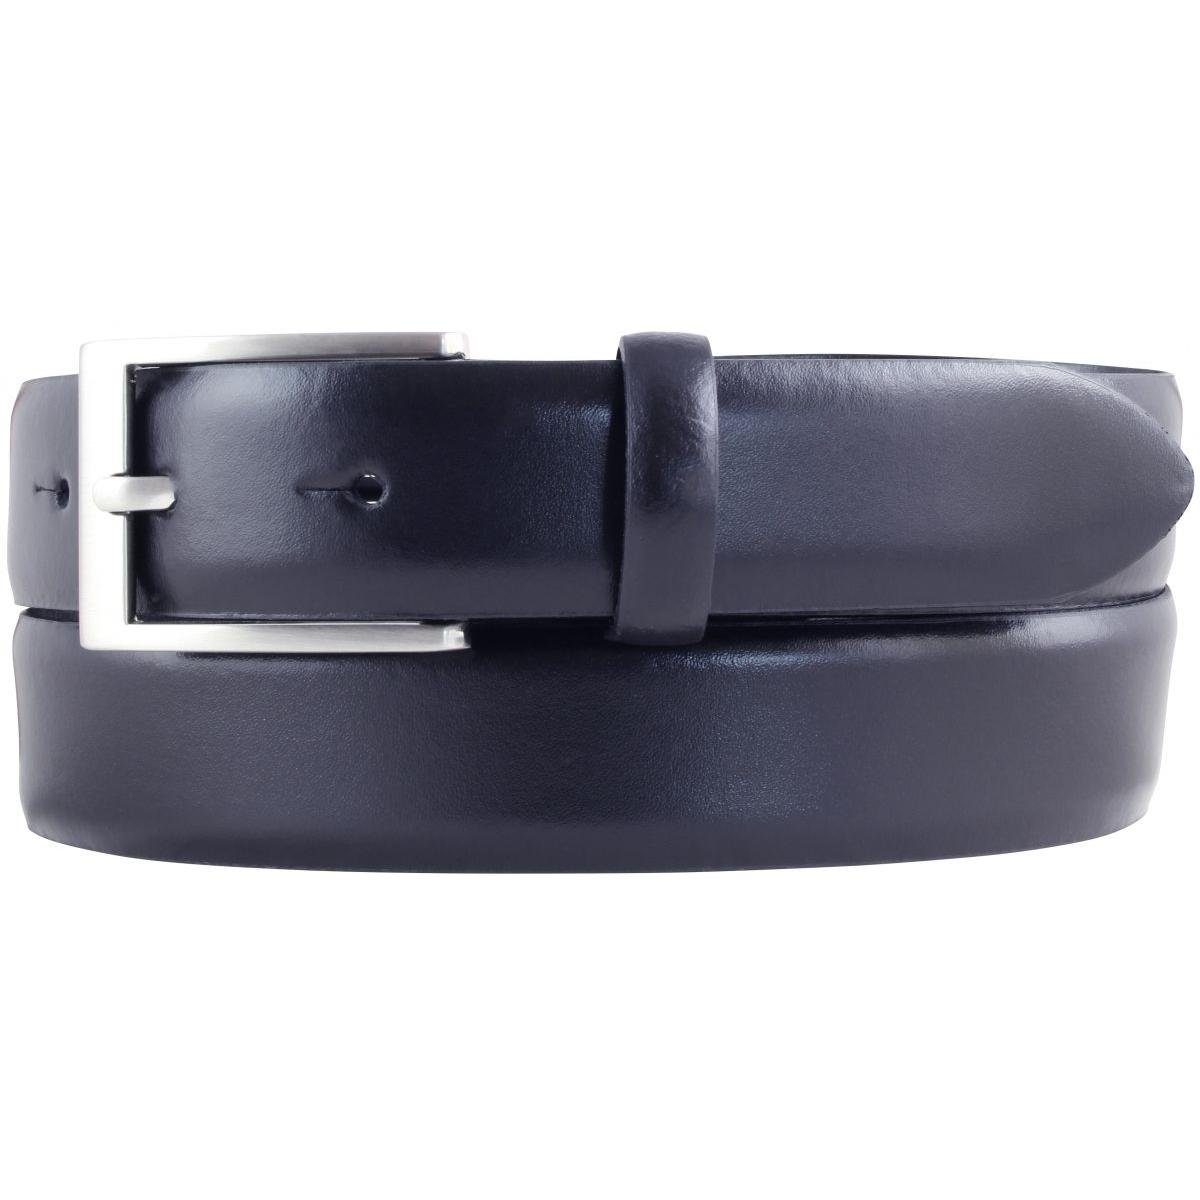 BELTINGER Ledergürtel Gürtel aus glattem Leder 3 cm - Anzug-Gürtel für Herren 30mm - Chino-G Marine, Silber